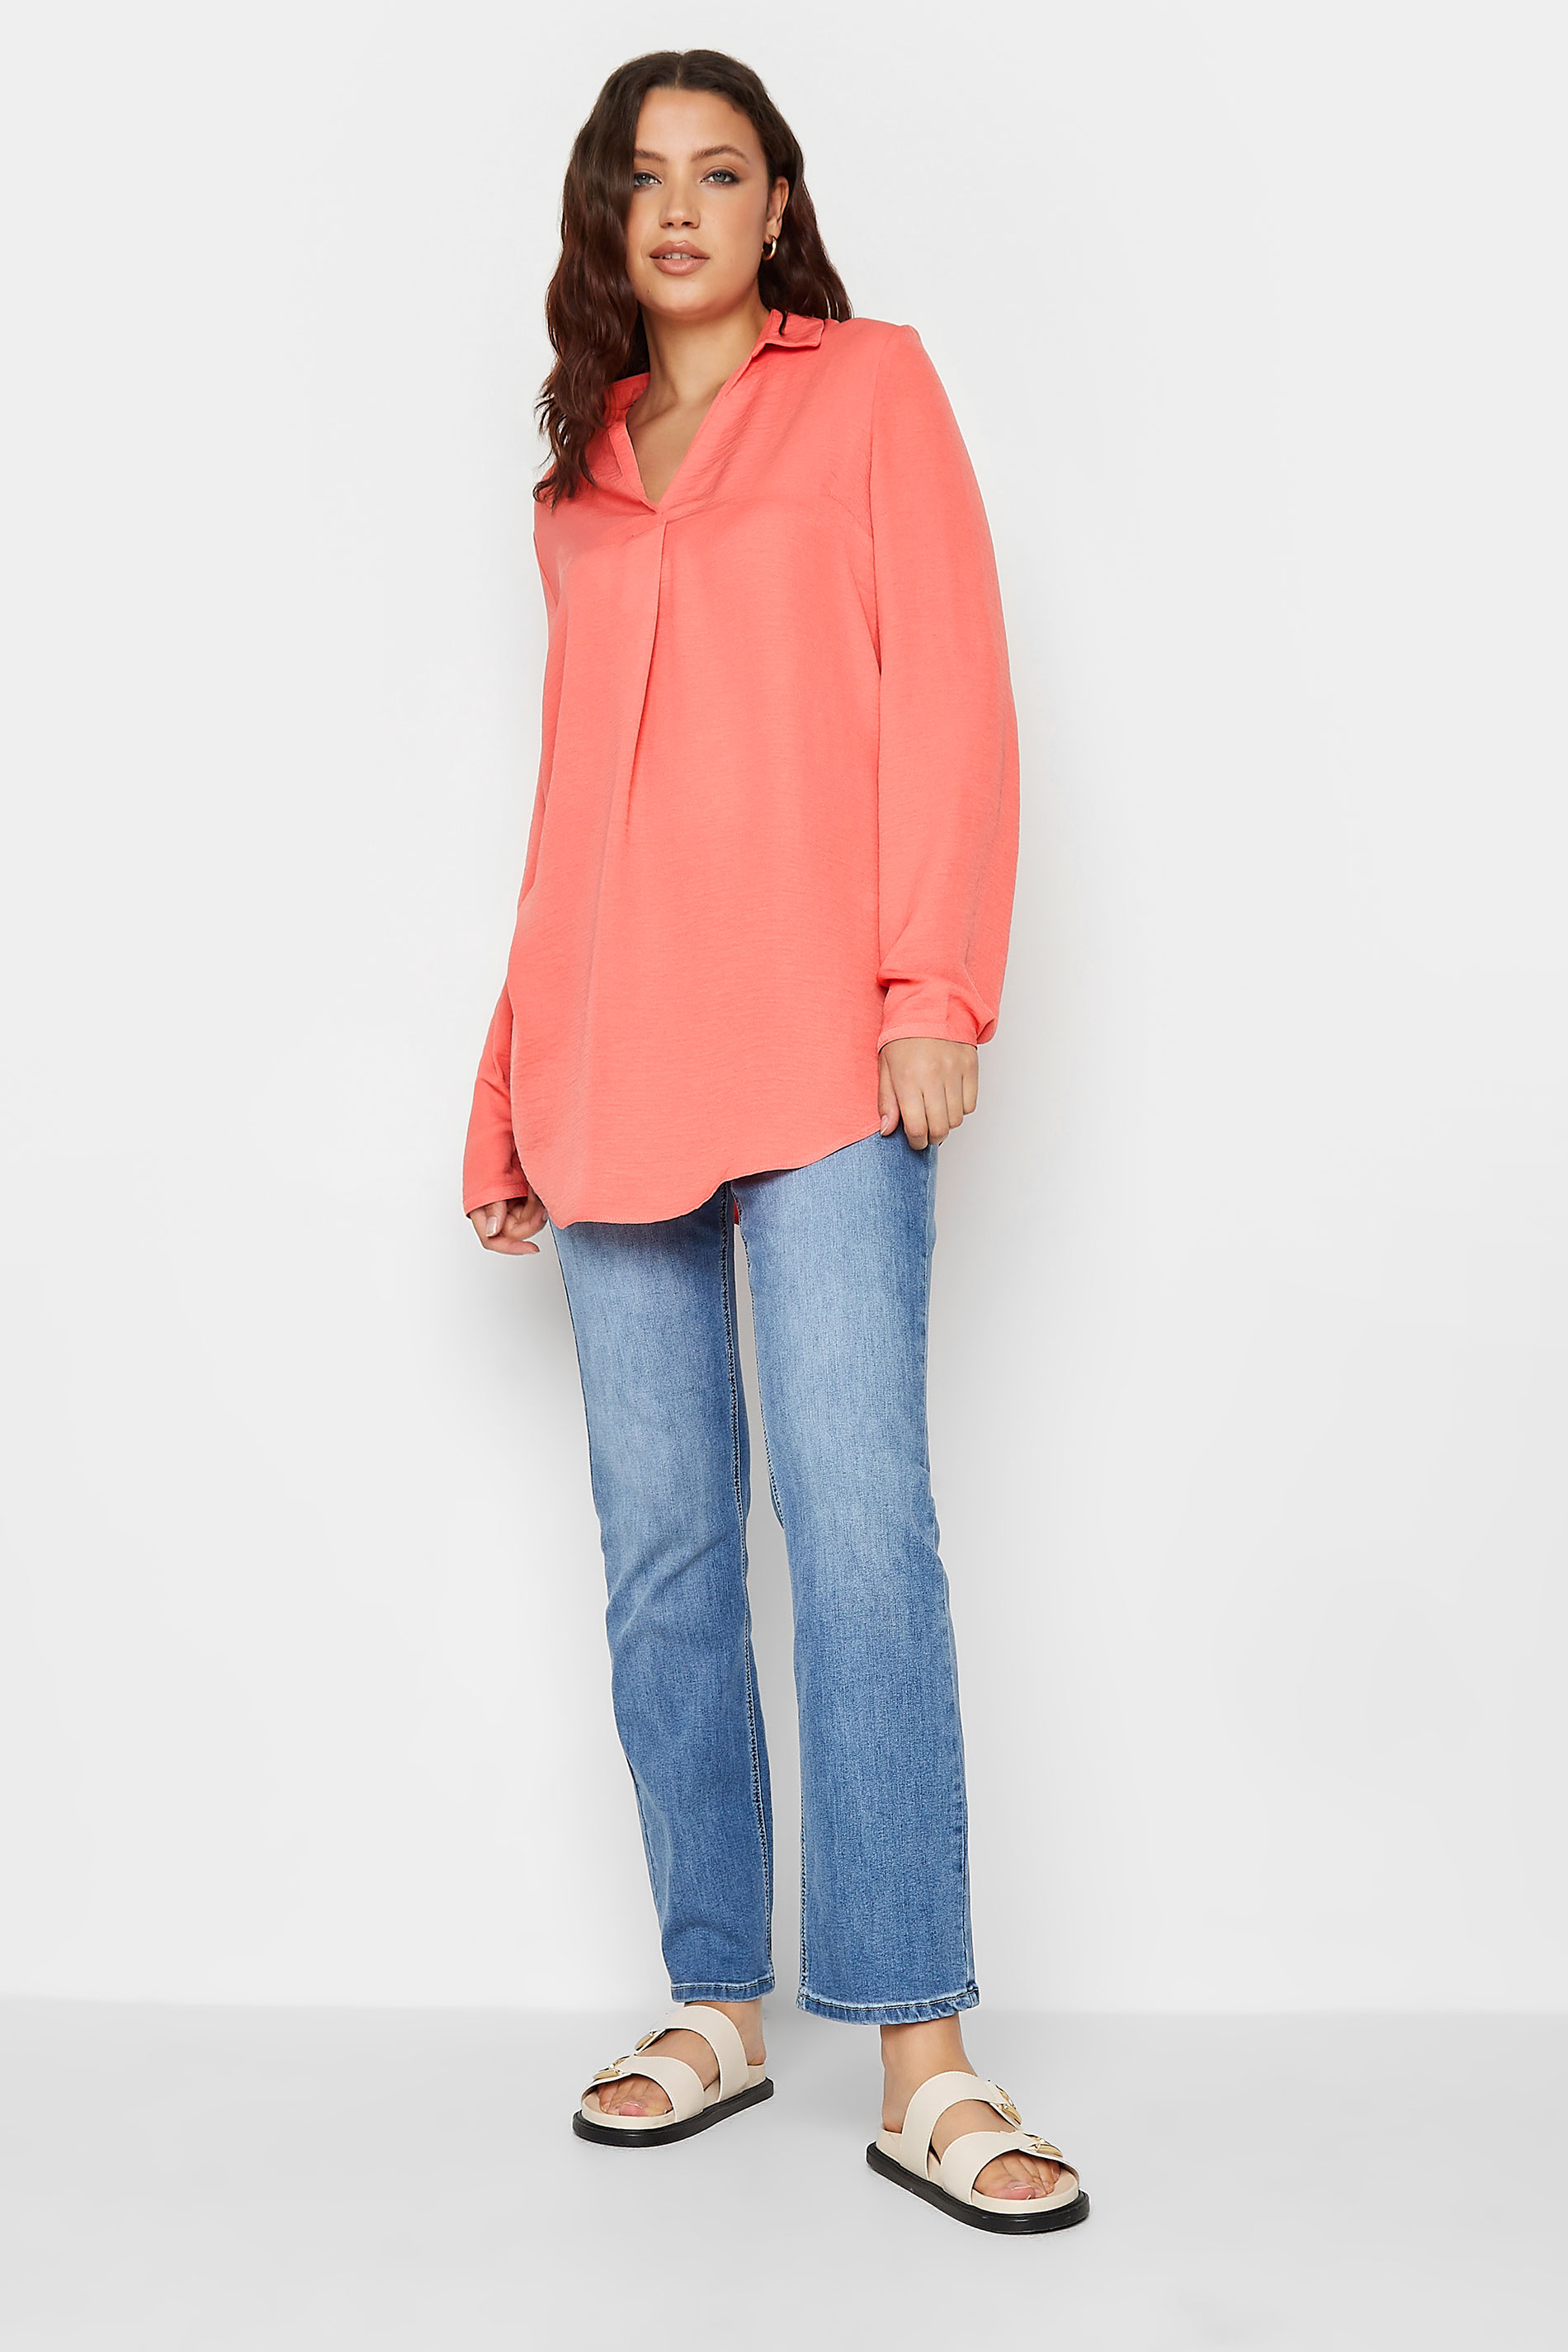 LTS Tall Women's Coral Pink V-Neck Twill Shirt | Long Tall Sally 2